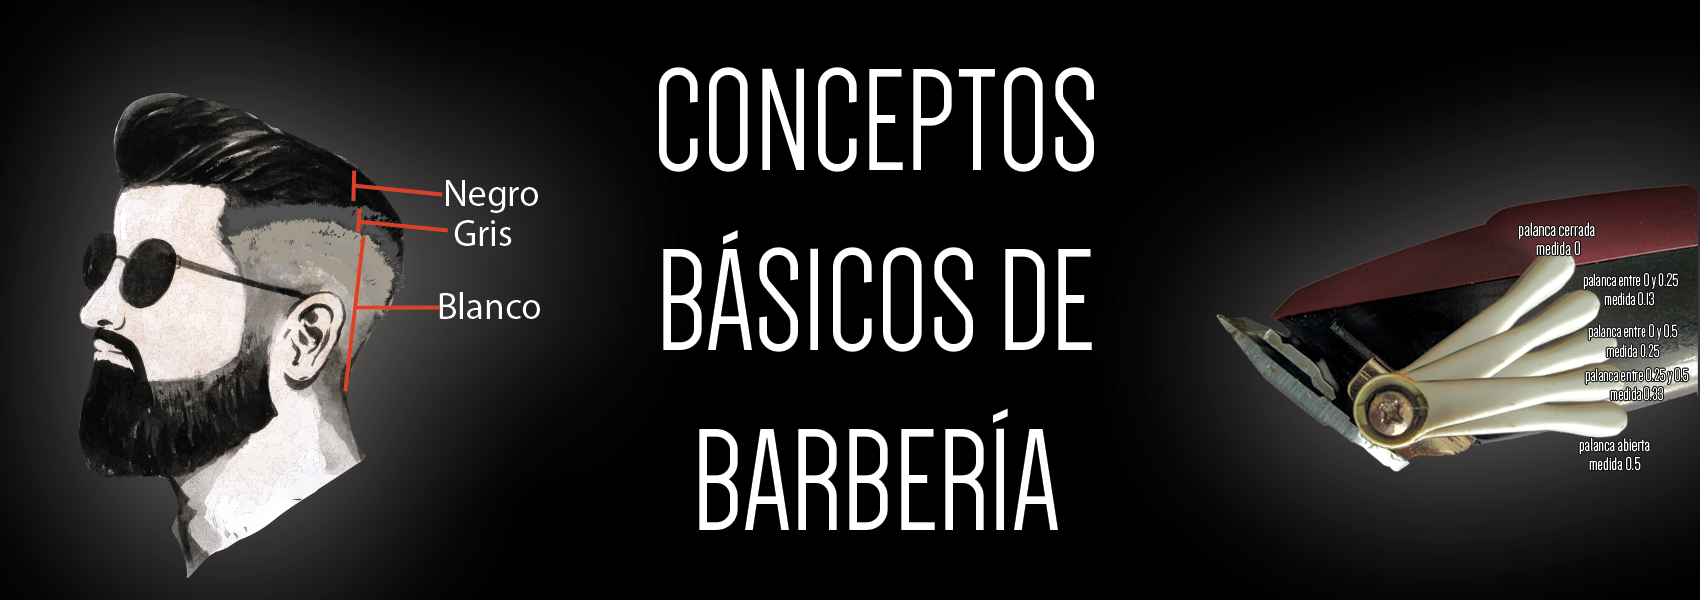 conceptos básicos de barbería